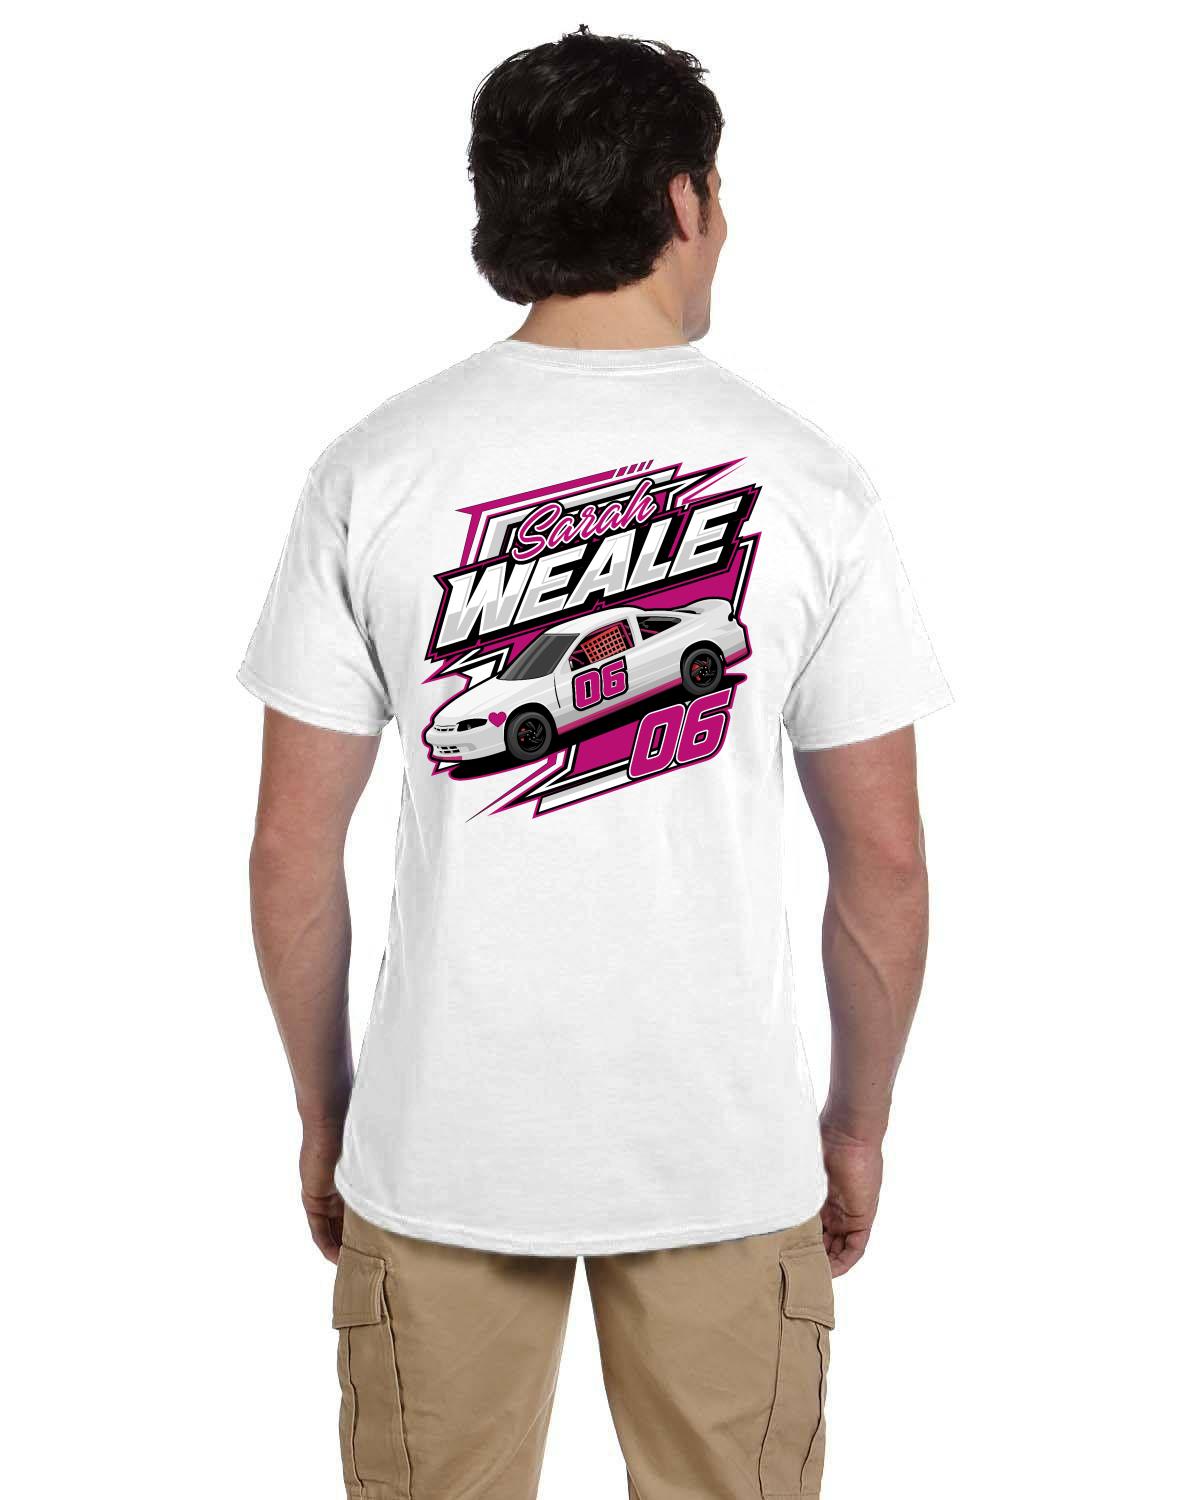 Sarah Weale Racing Men's T-Shirt